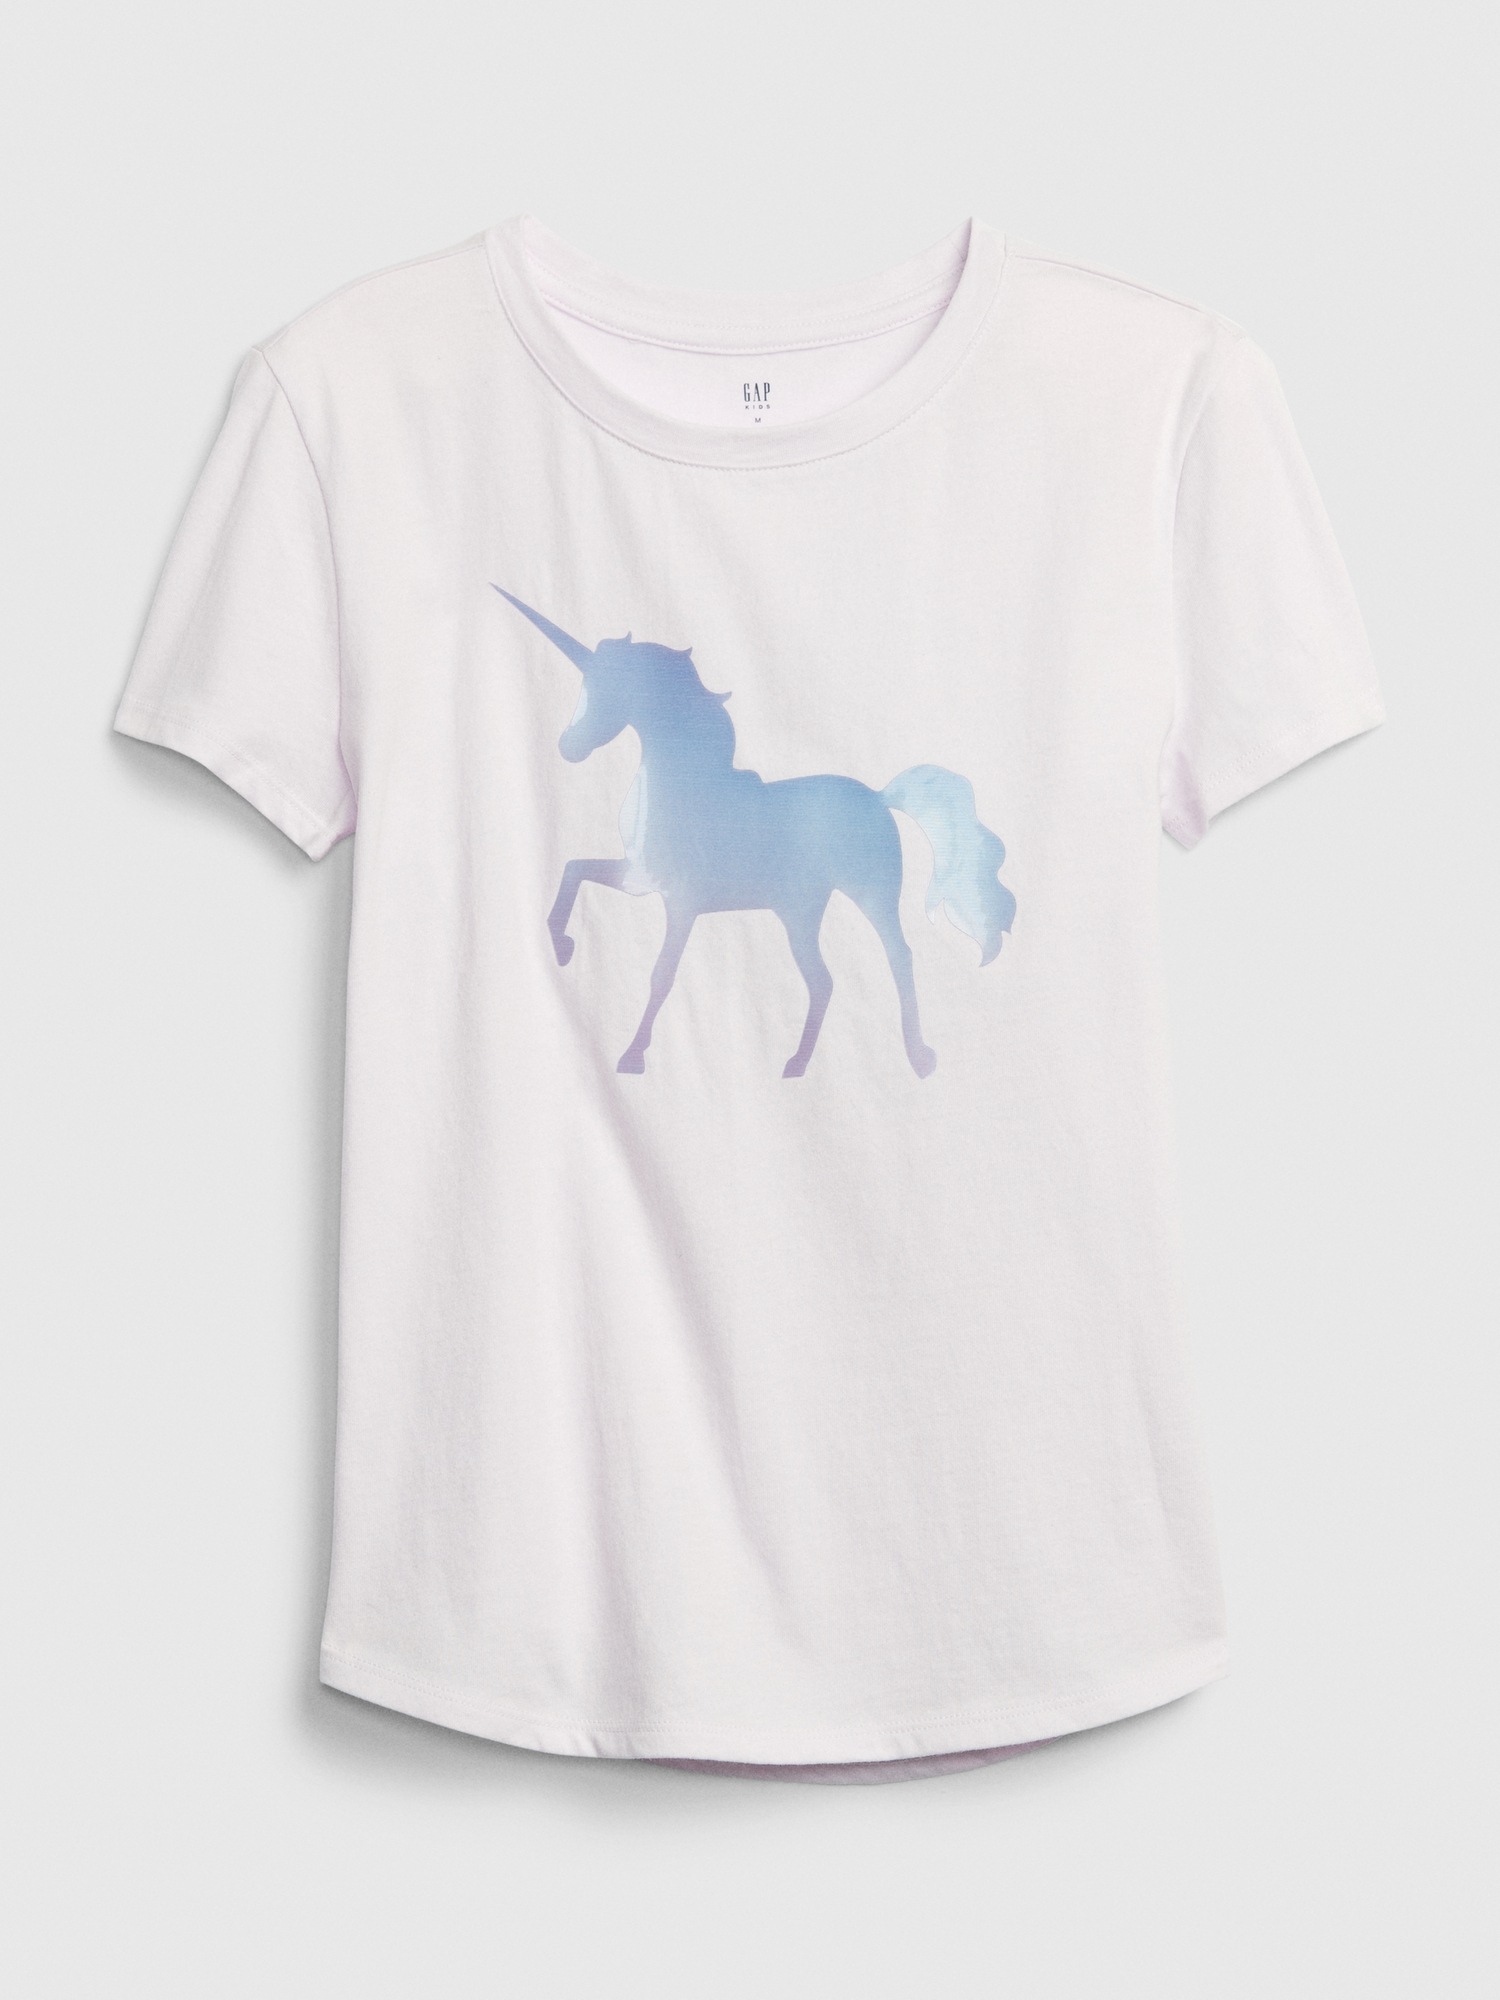 gap unicorn shirt